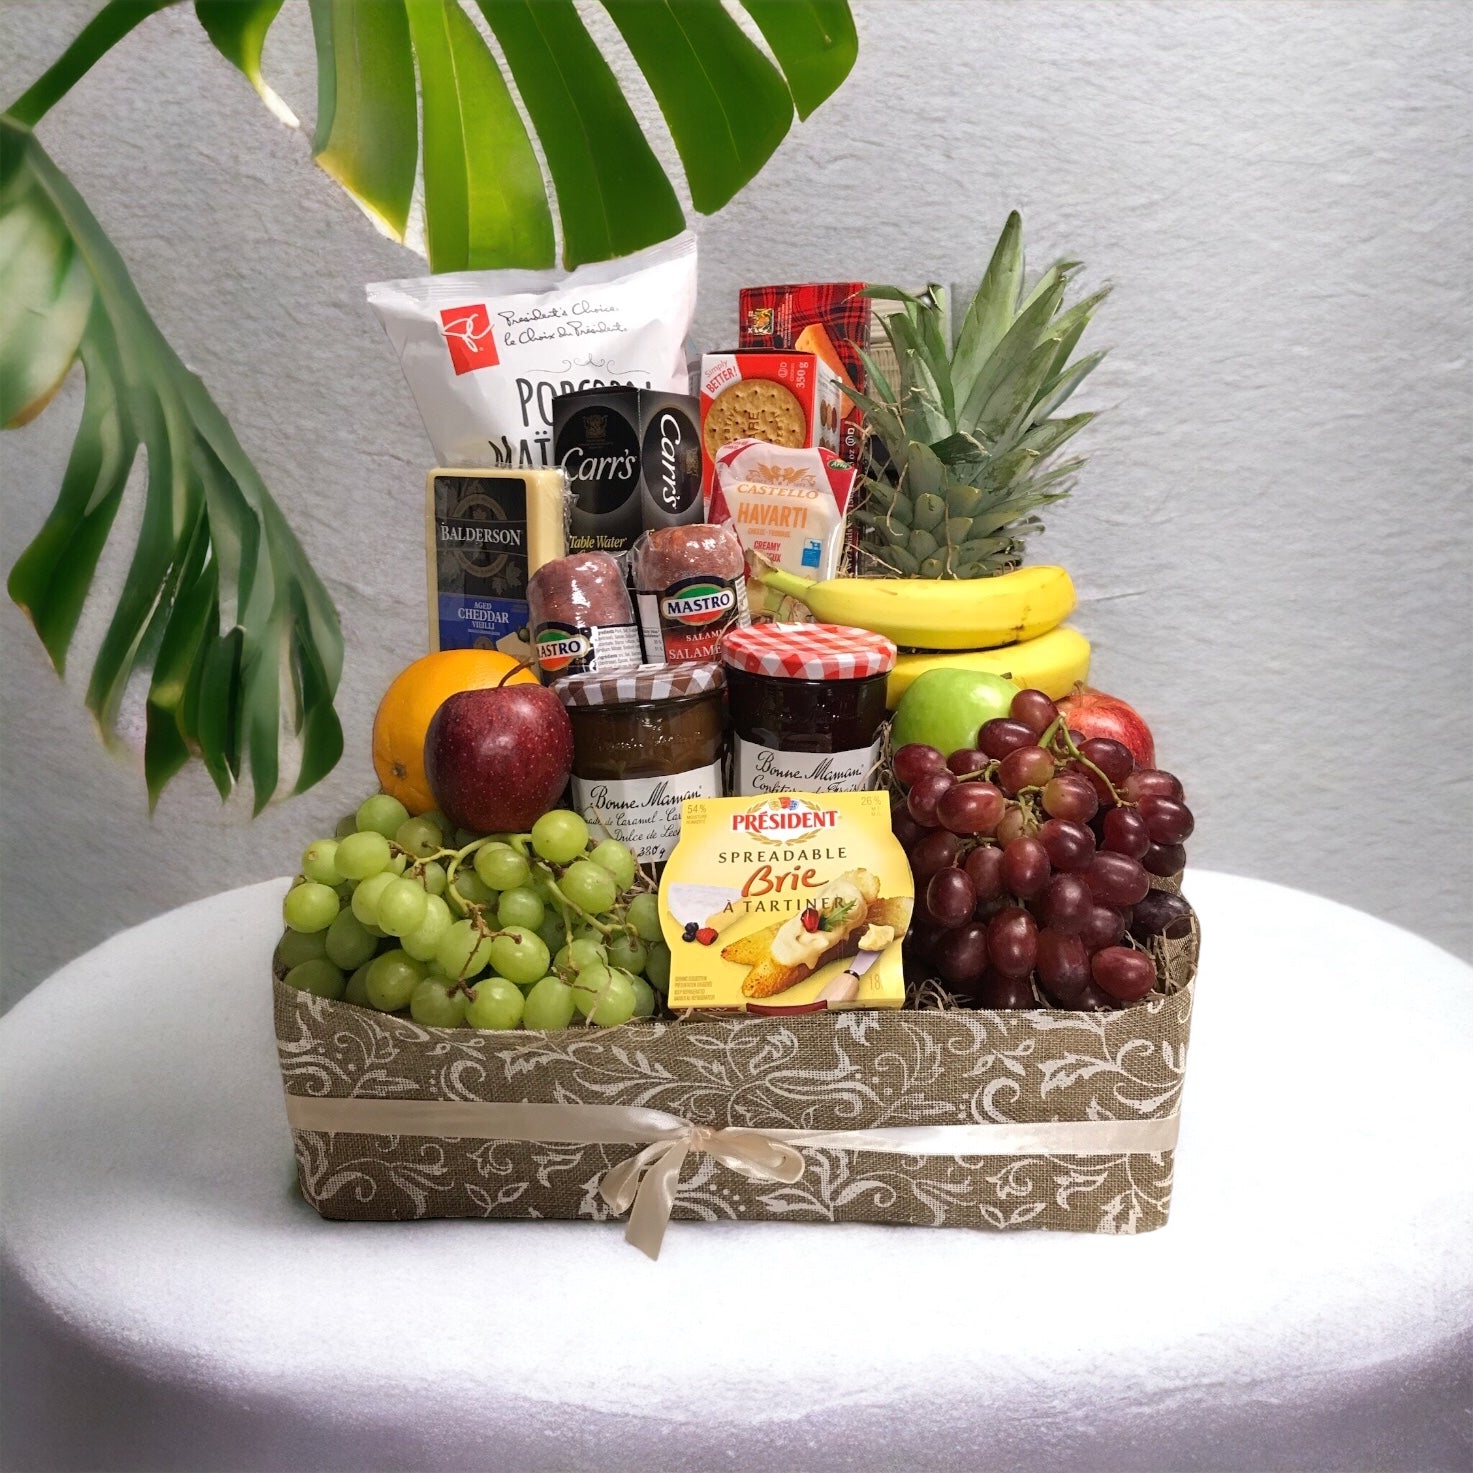 Happy Birthday Gift Basket – Gift Baskets by Jessie Lynn